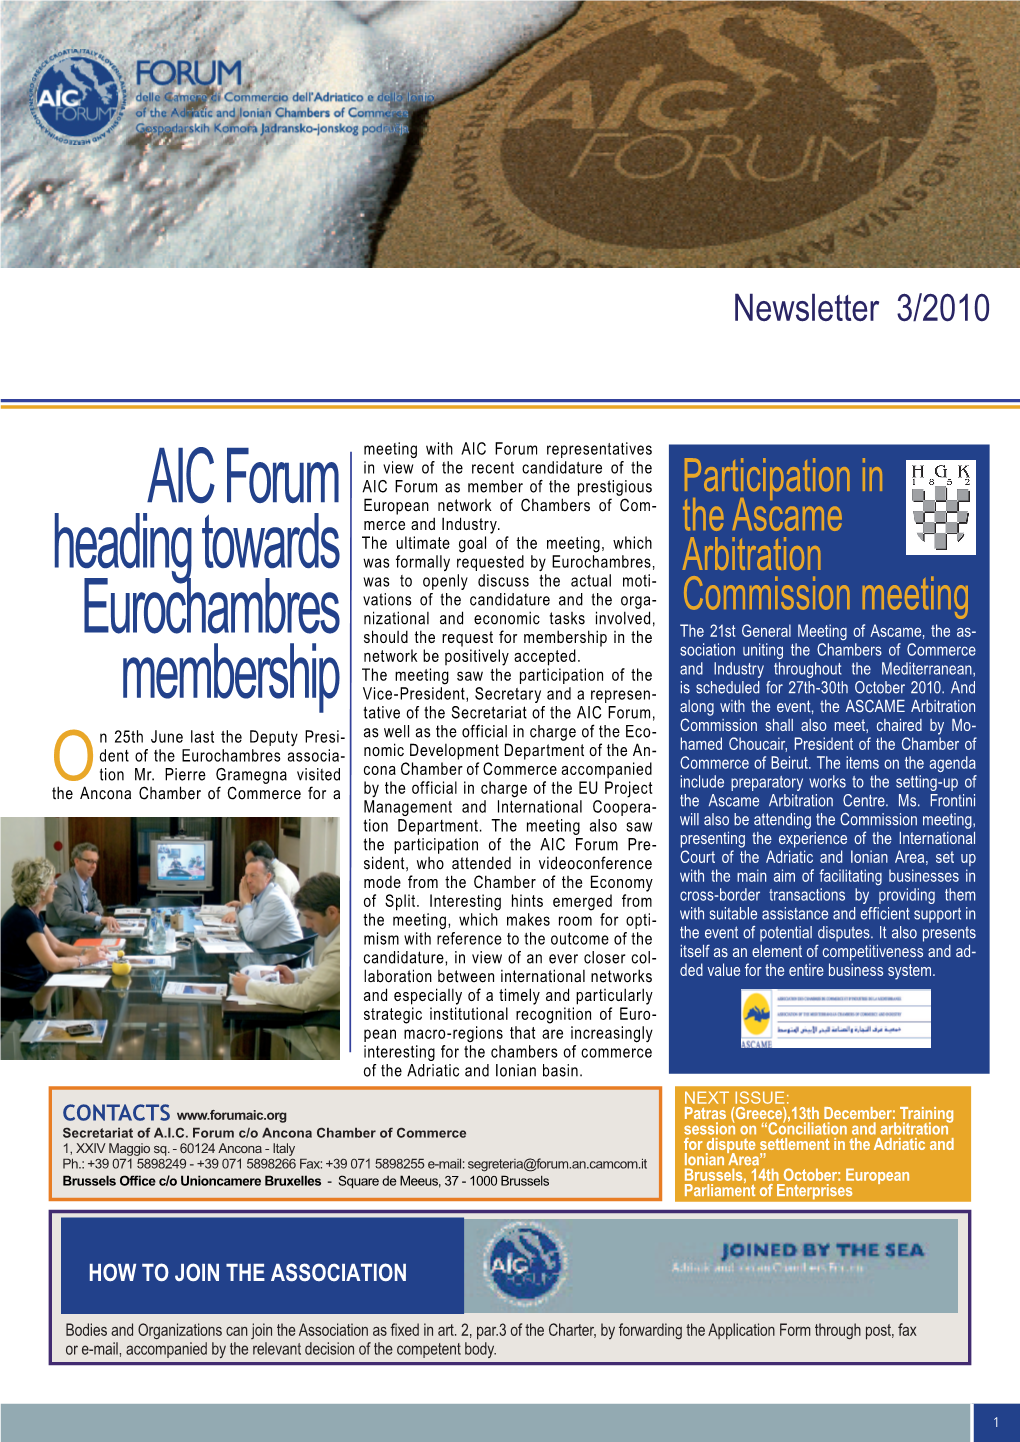 AIC Forum Heading Towards Eurochambres Membership